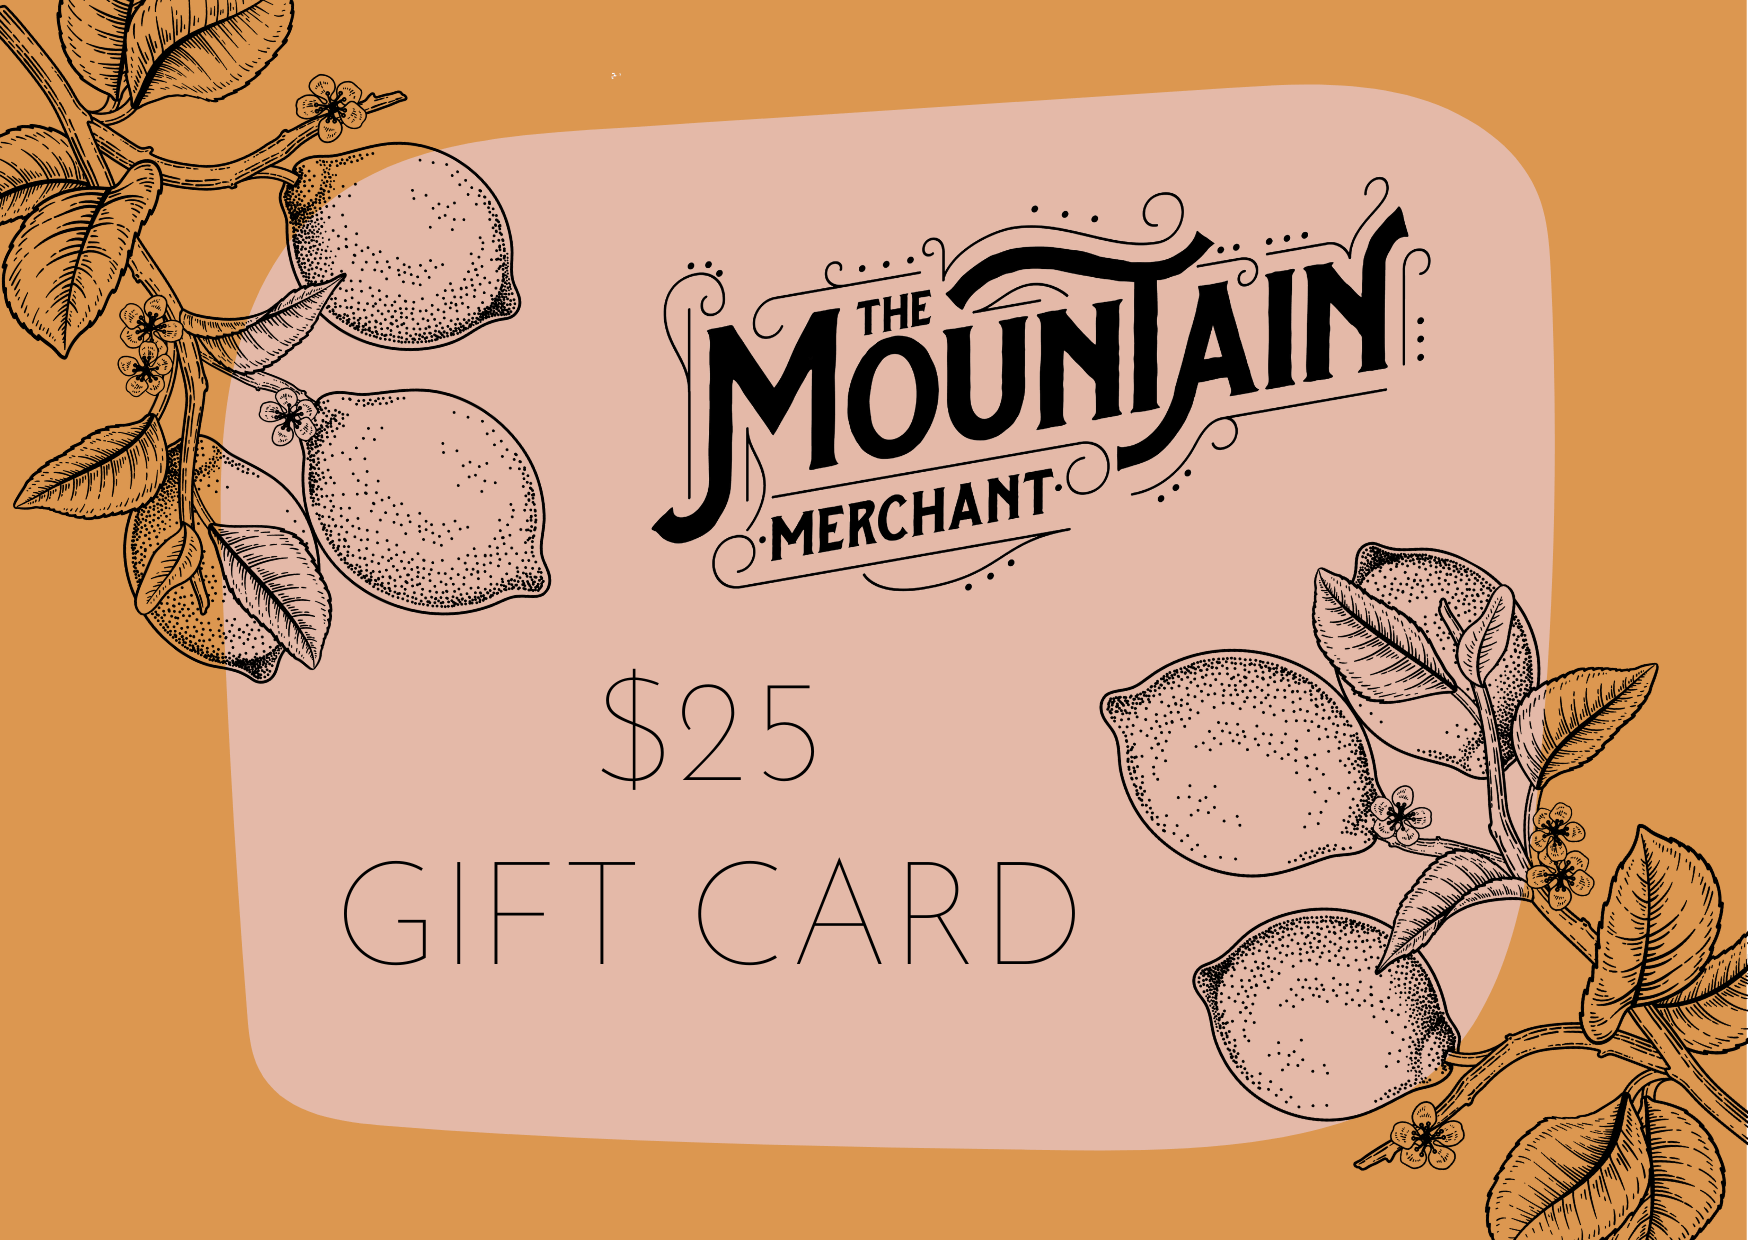 The Mountain Merchant - Gift Card $25 -The Mountain Merchant -The Mountain Merchant